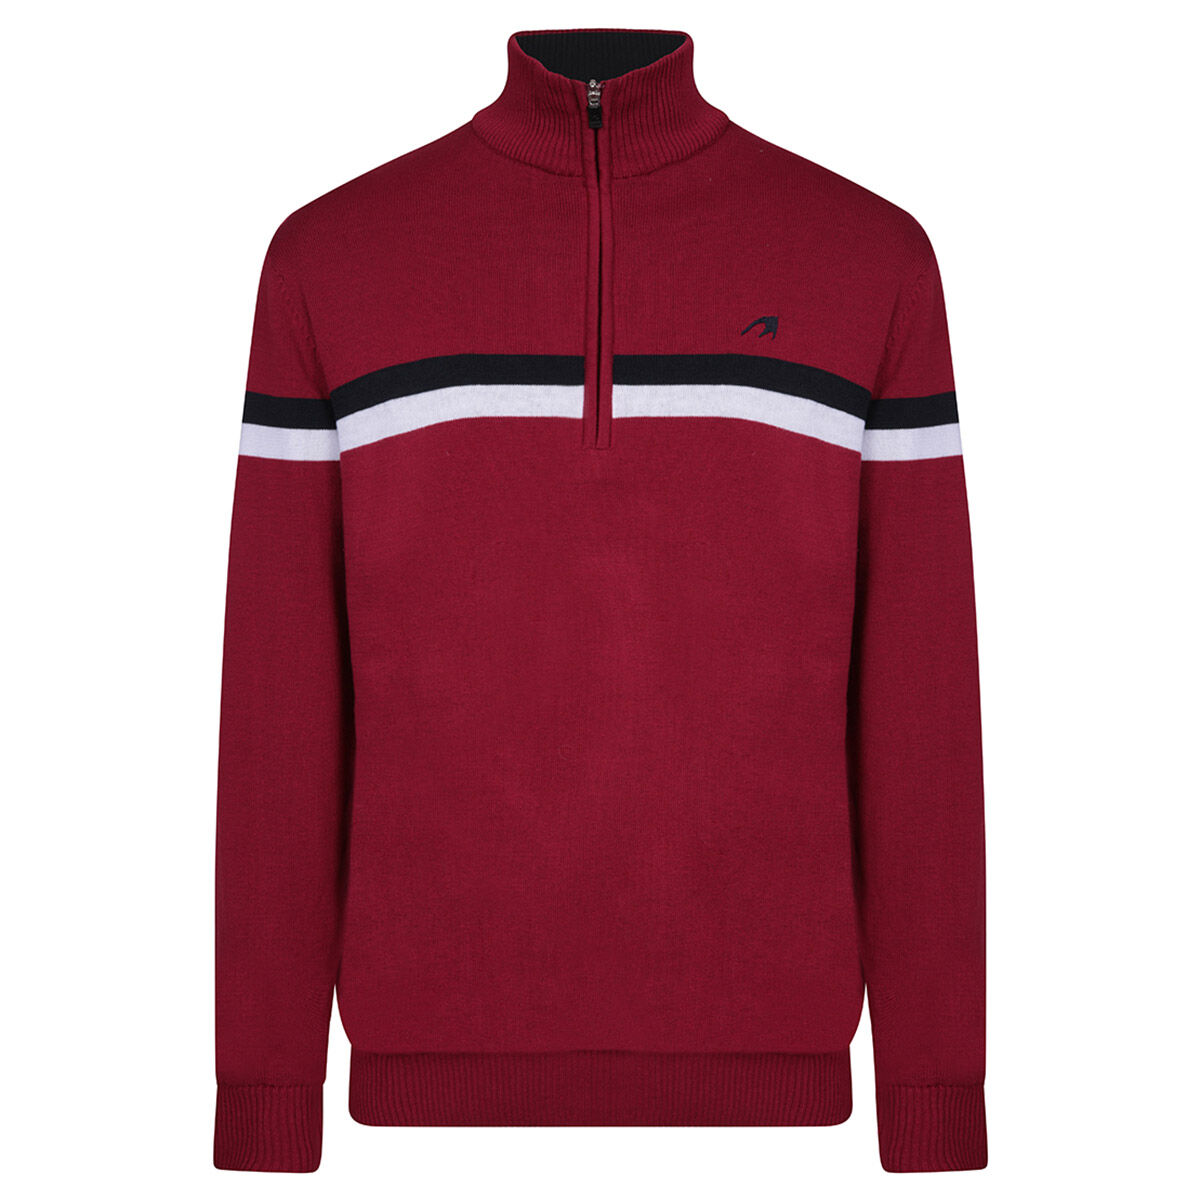 Vêtement intermédiaire en tricot doublé Benross, homme, Burgundy/navy, Small  | Online Golf